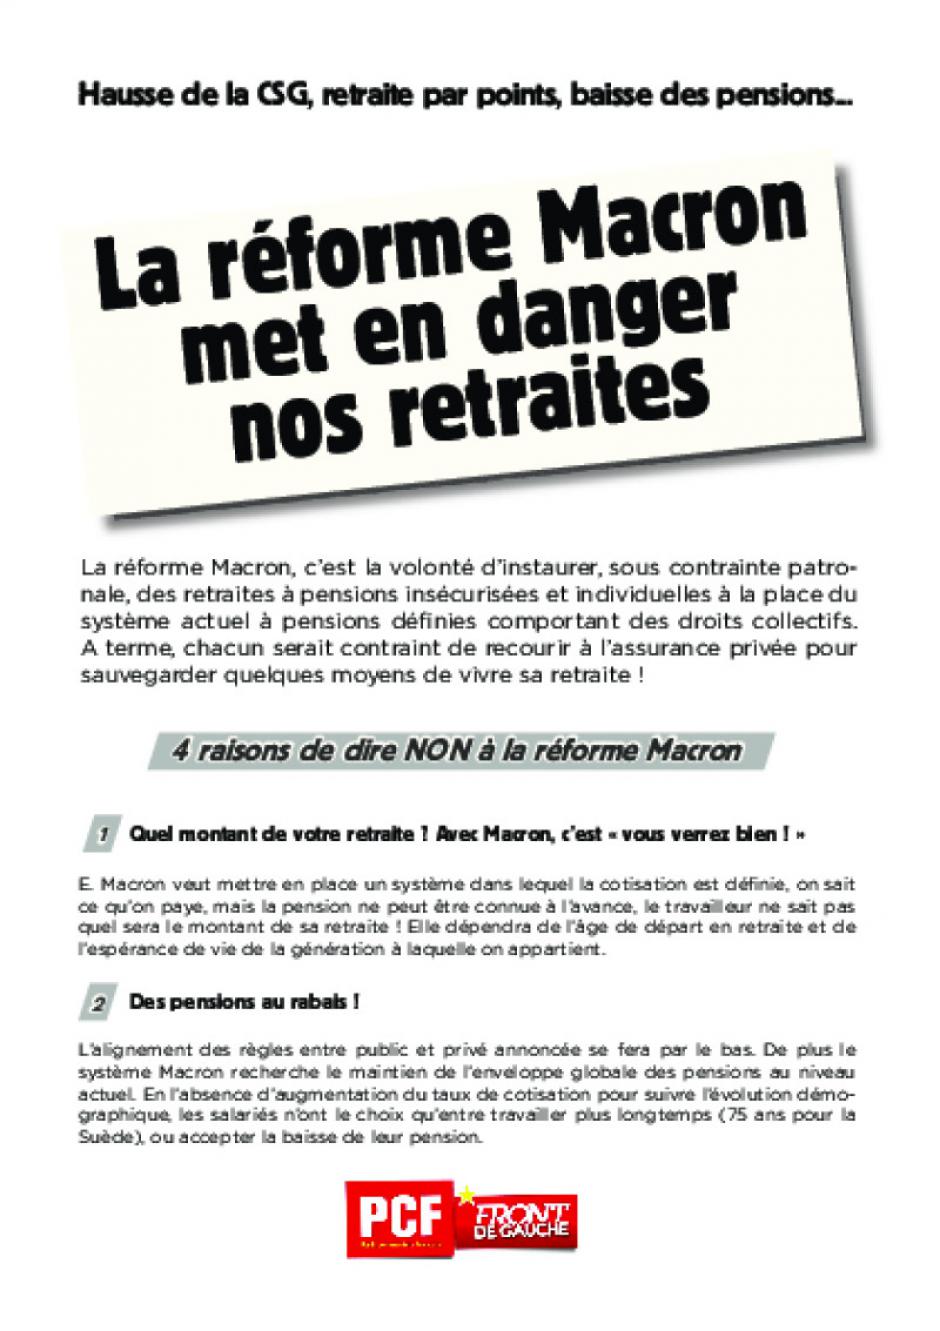 La réforme Macron met en danger nos retraites